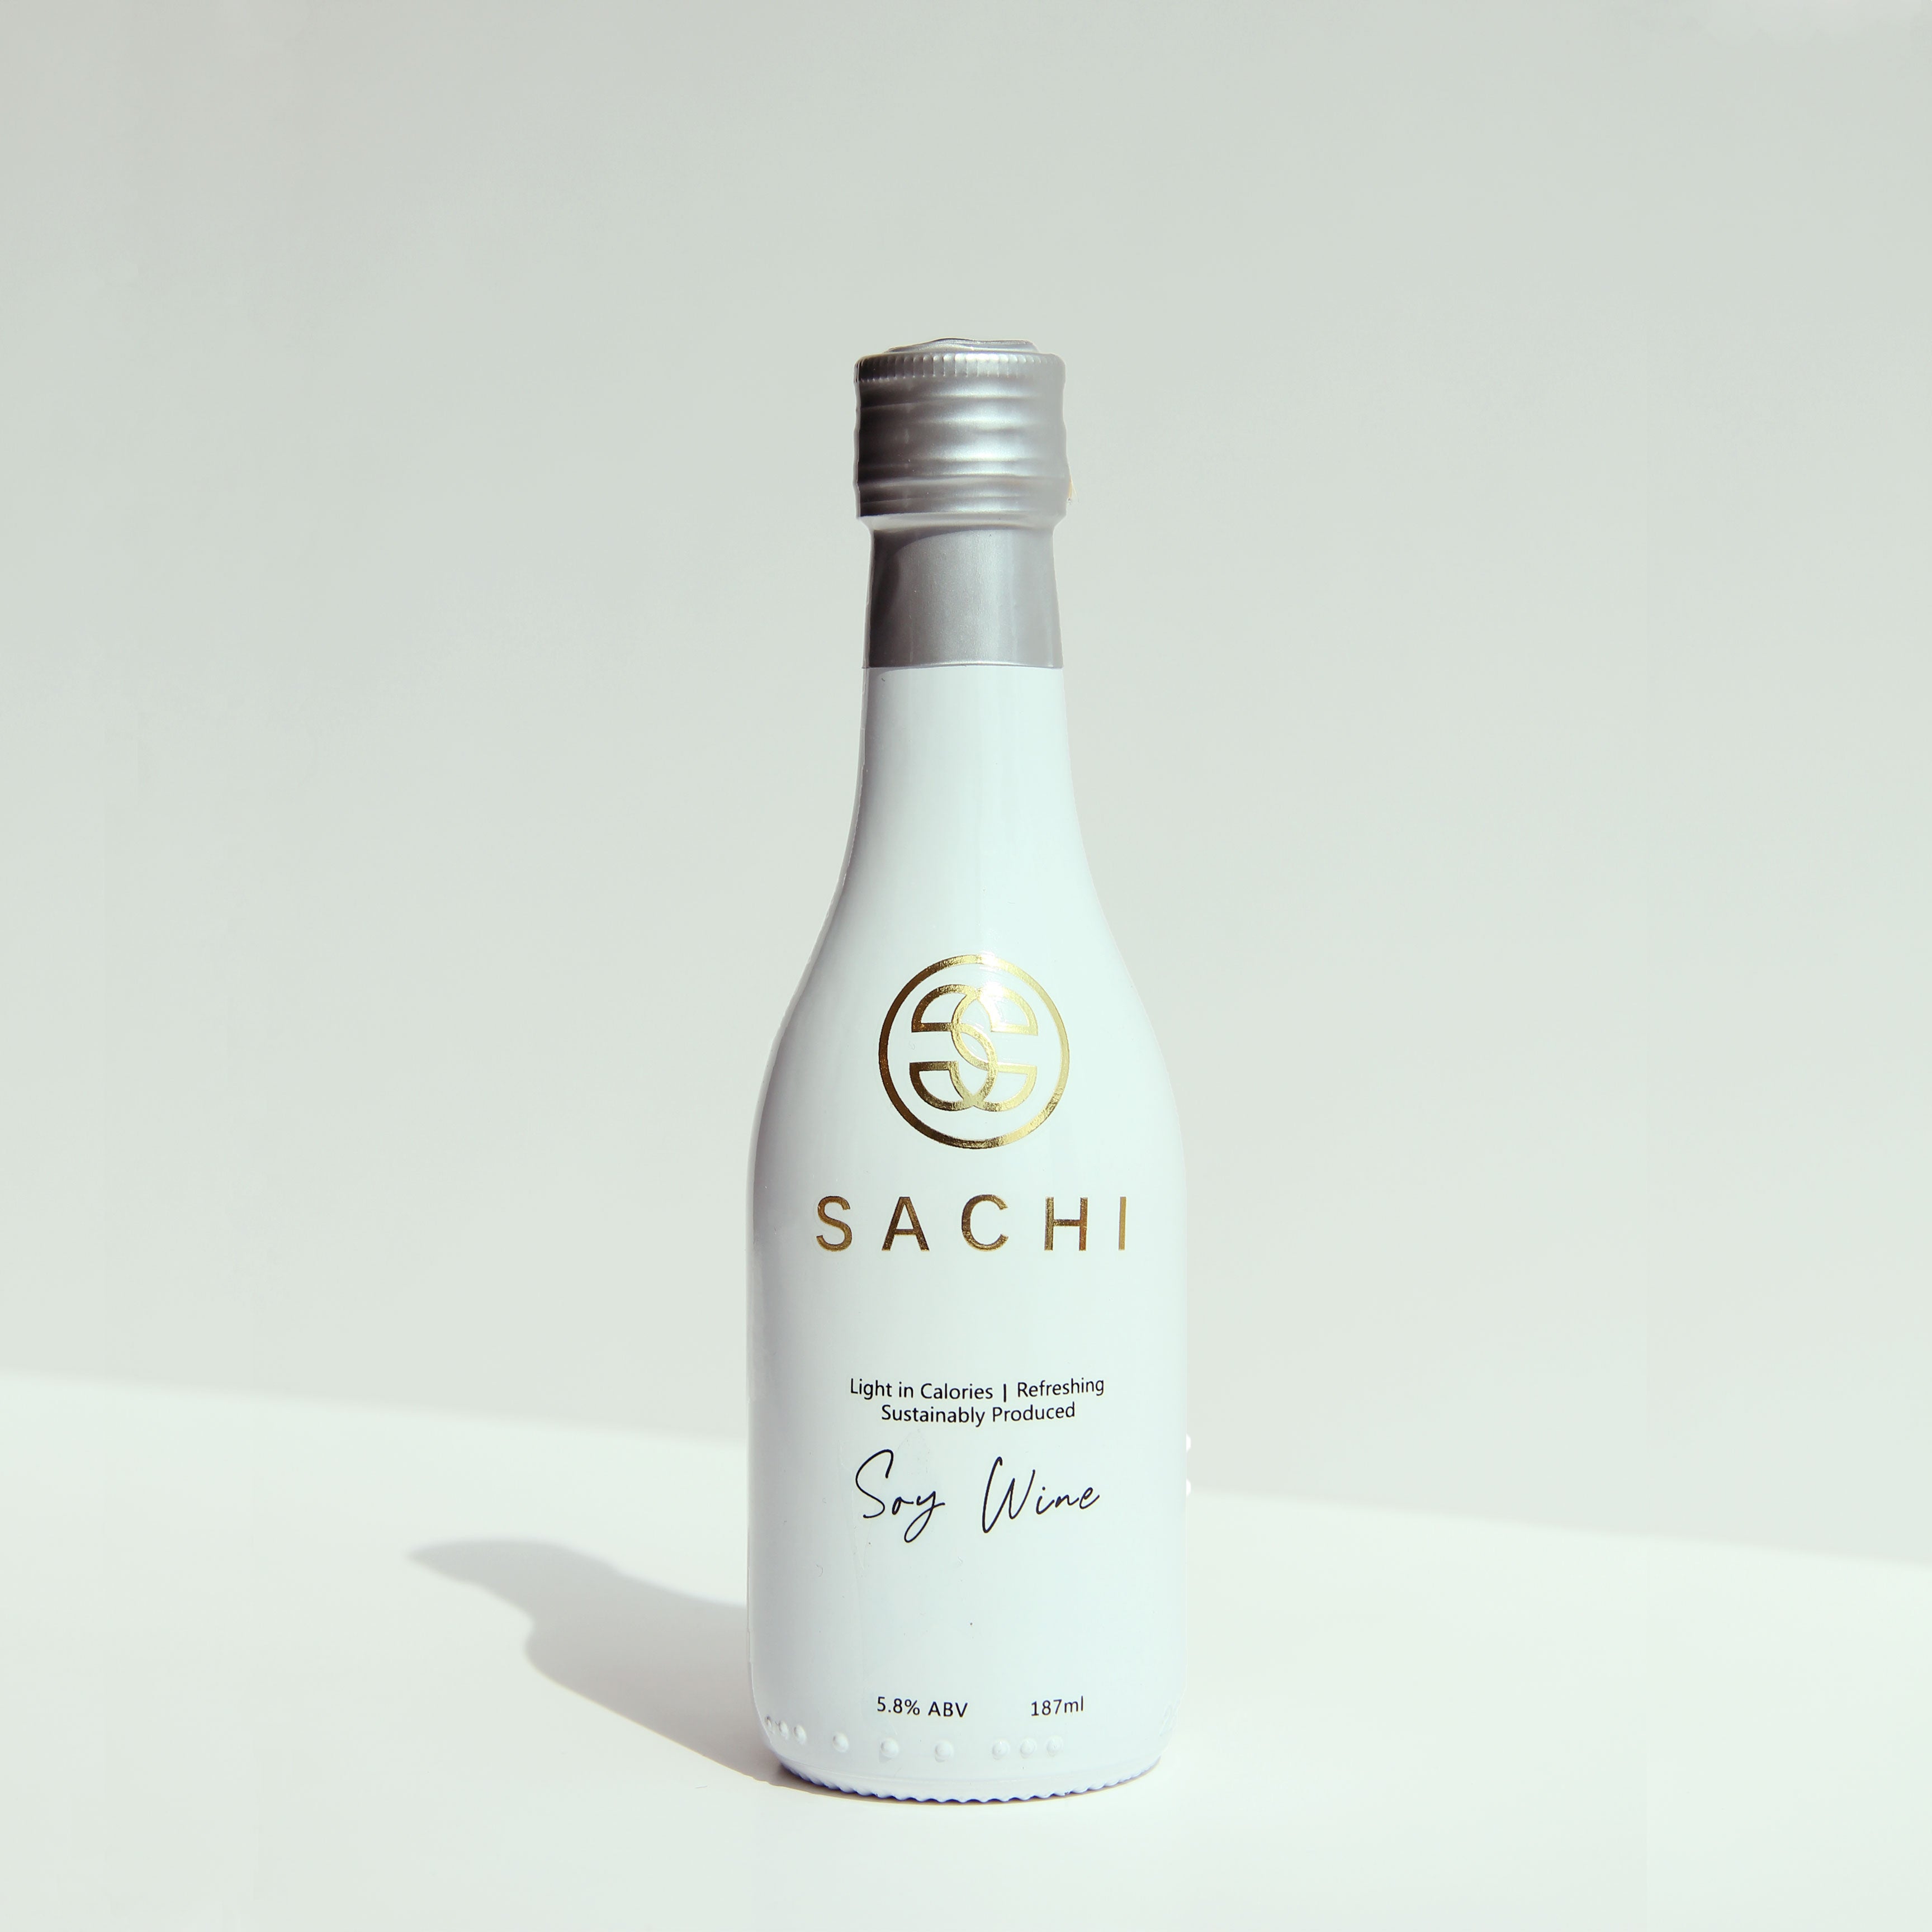 Sachi Soy Wine (187mL)